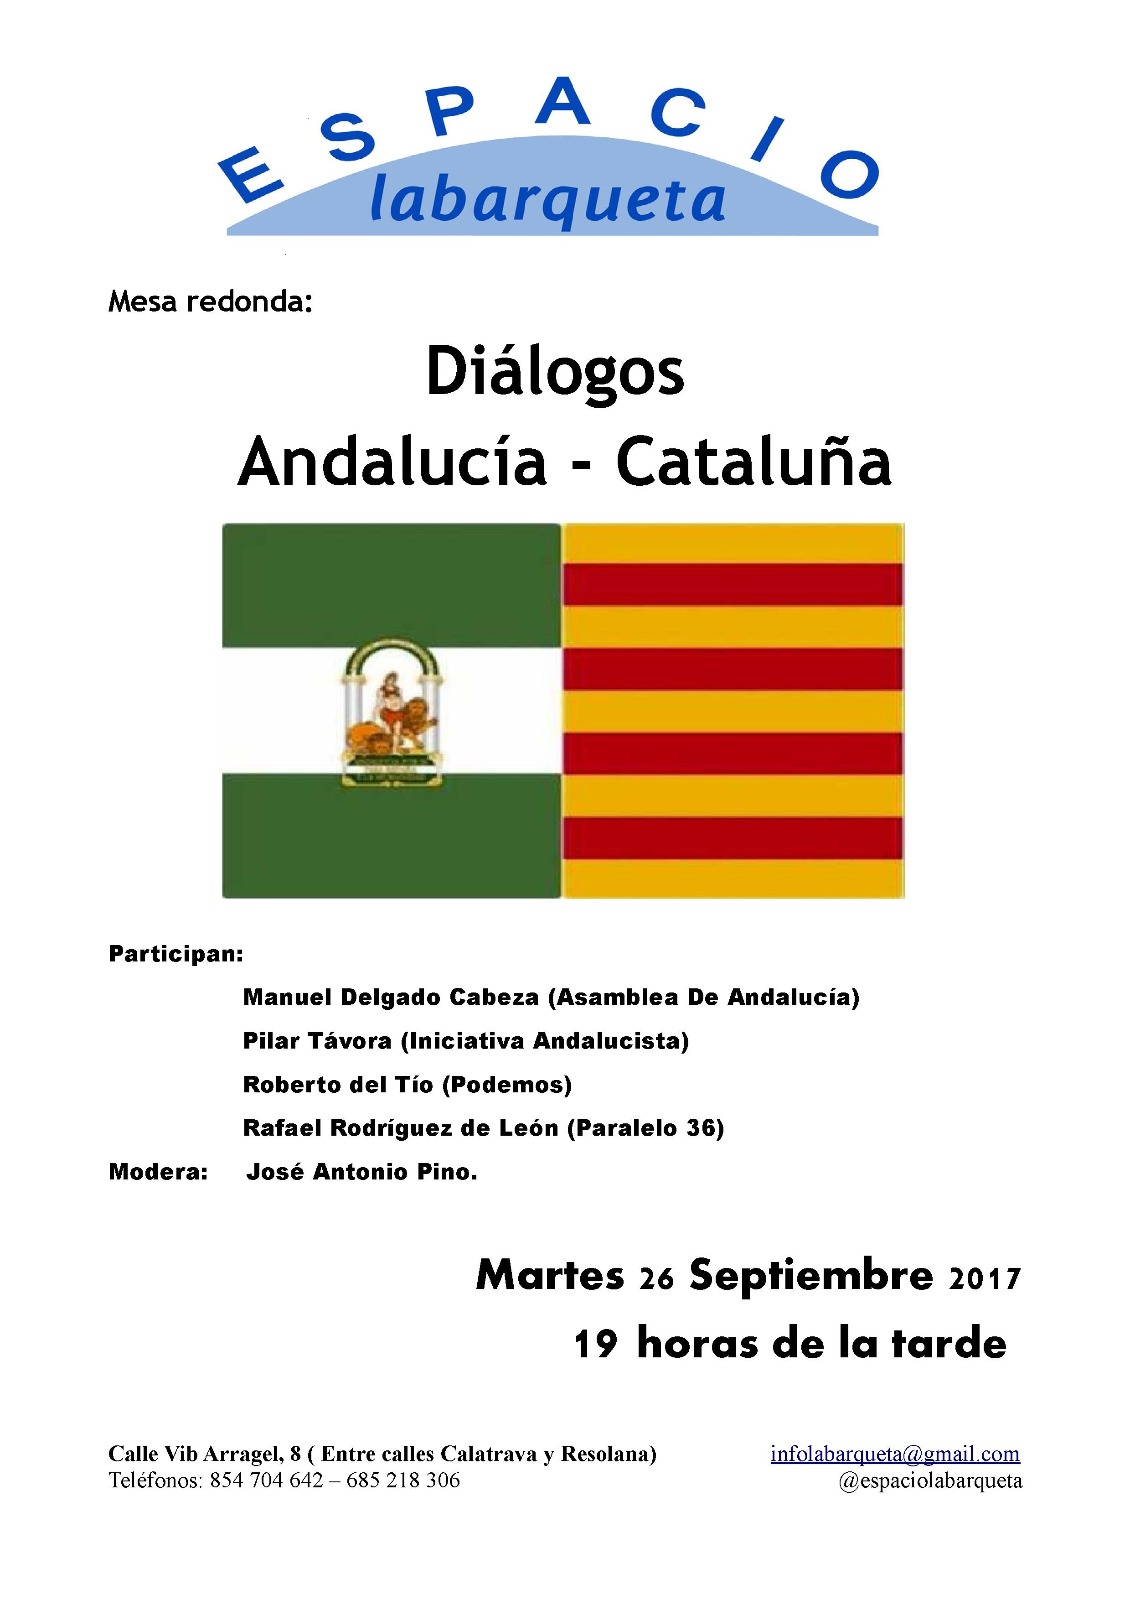 ACTO: Diálogos Andalucía-Cataluña. Martes, 26 septiembre,19H en ESPACIO labarqueta. Sevilla